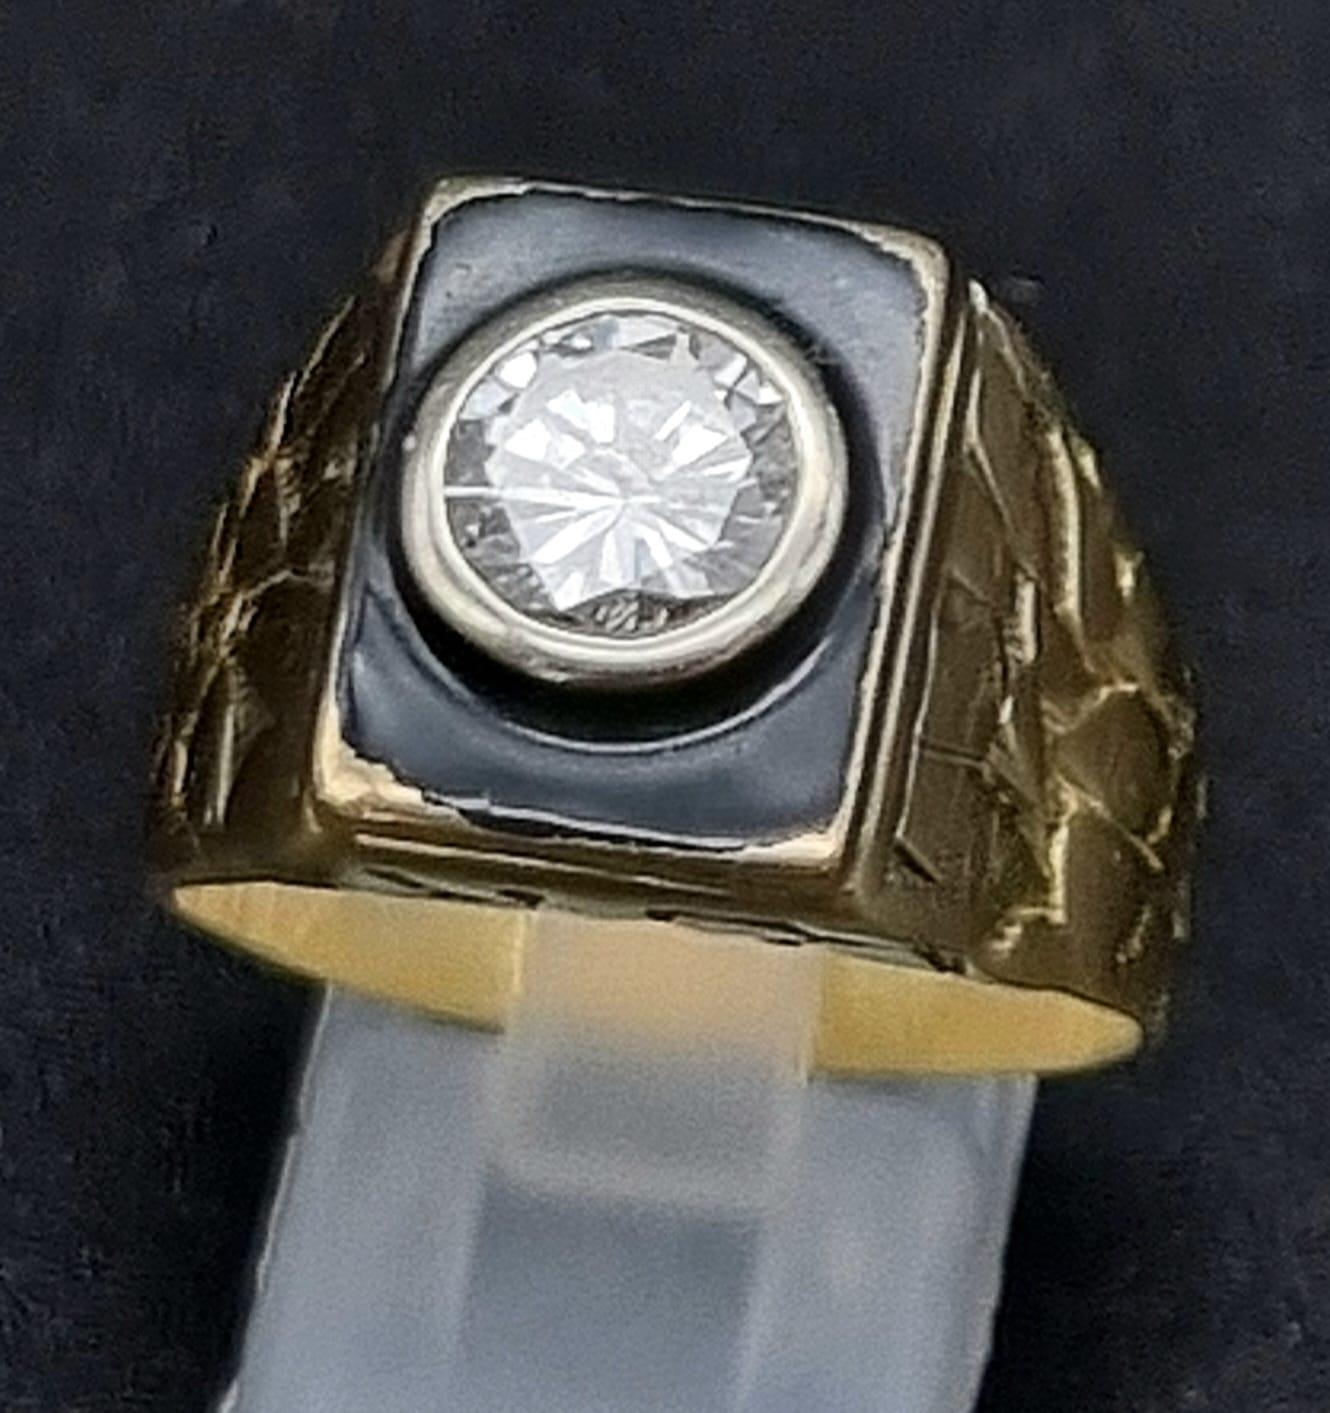 A Striking 18K Yellow Gold Black Enamel and Diamond Ring. Round brilliant cut central diamond 1.